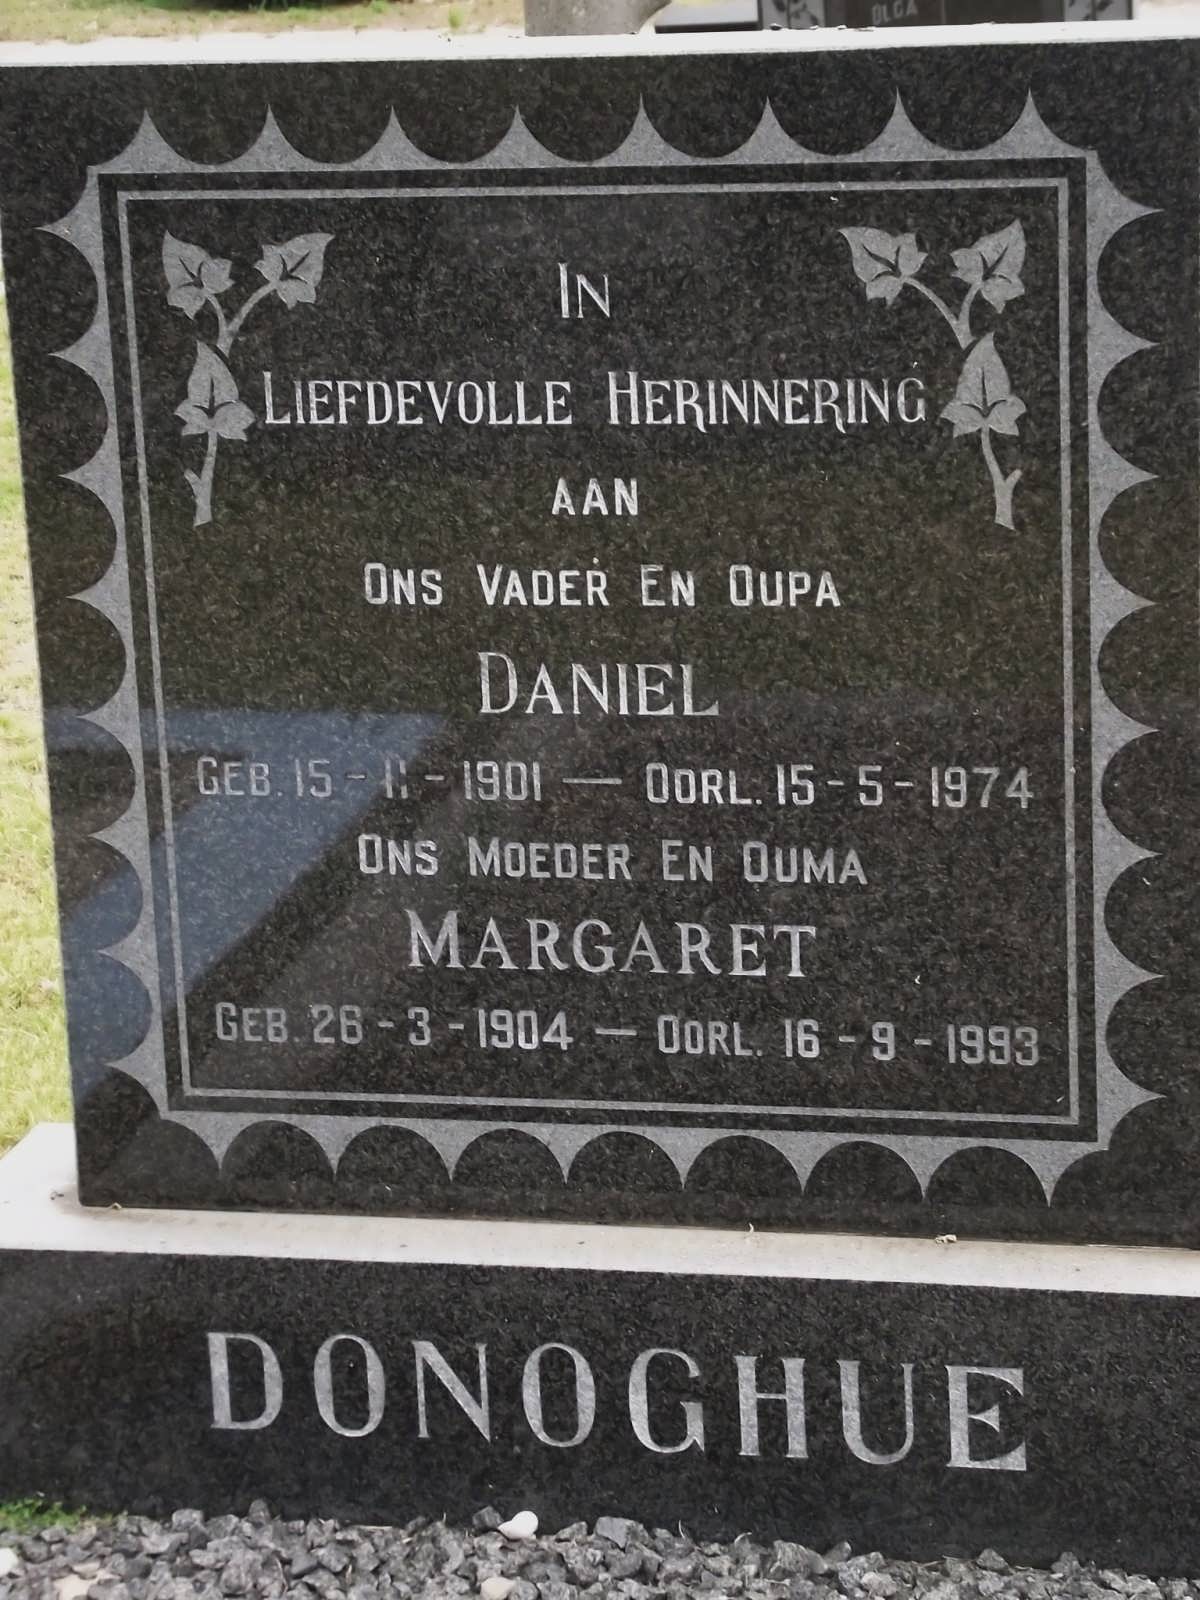 DONOGHUE Daniel 1901-1974 & Margaret 1904-1993